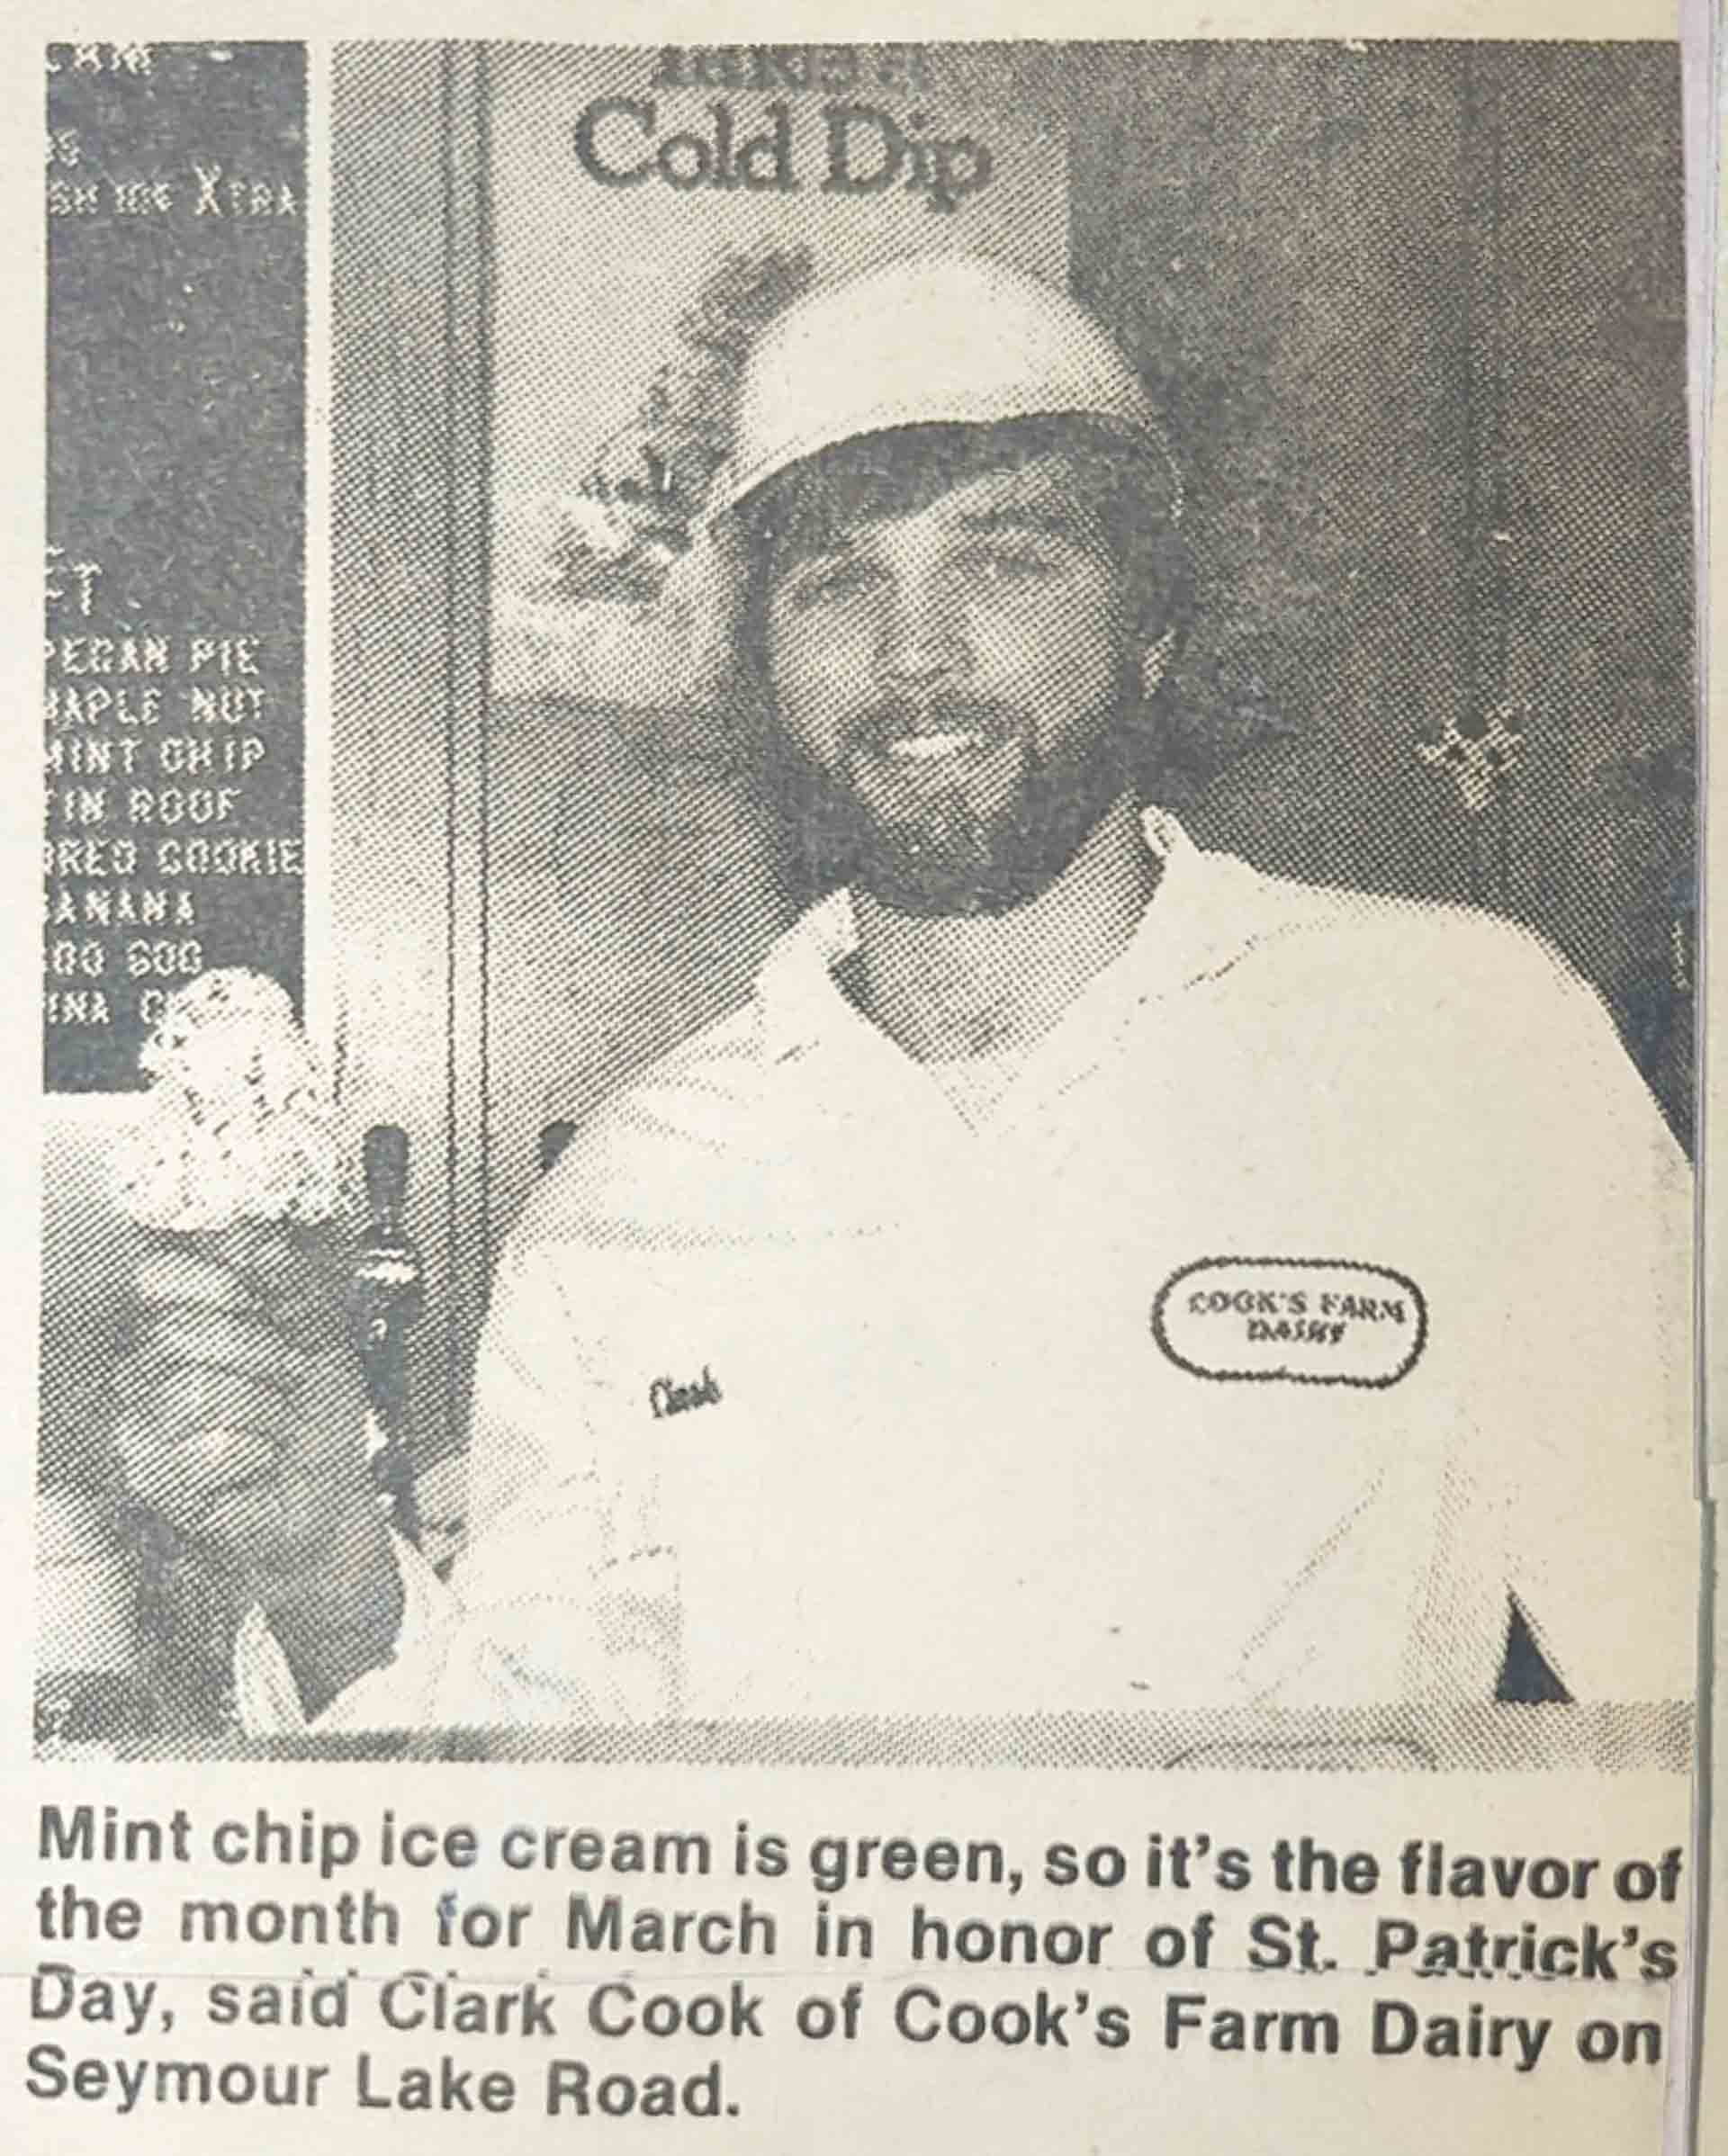 Clark Cook holding ice cream cone 1983